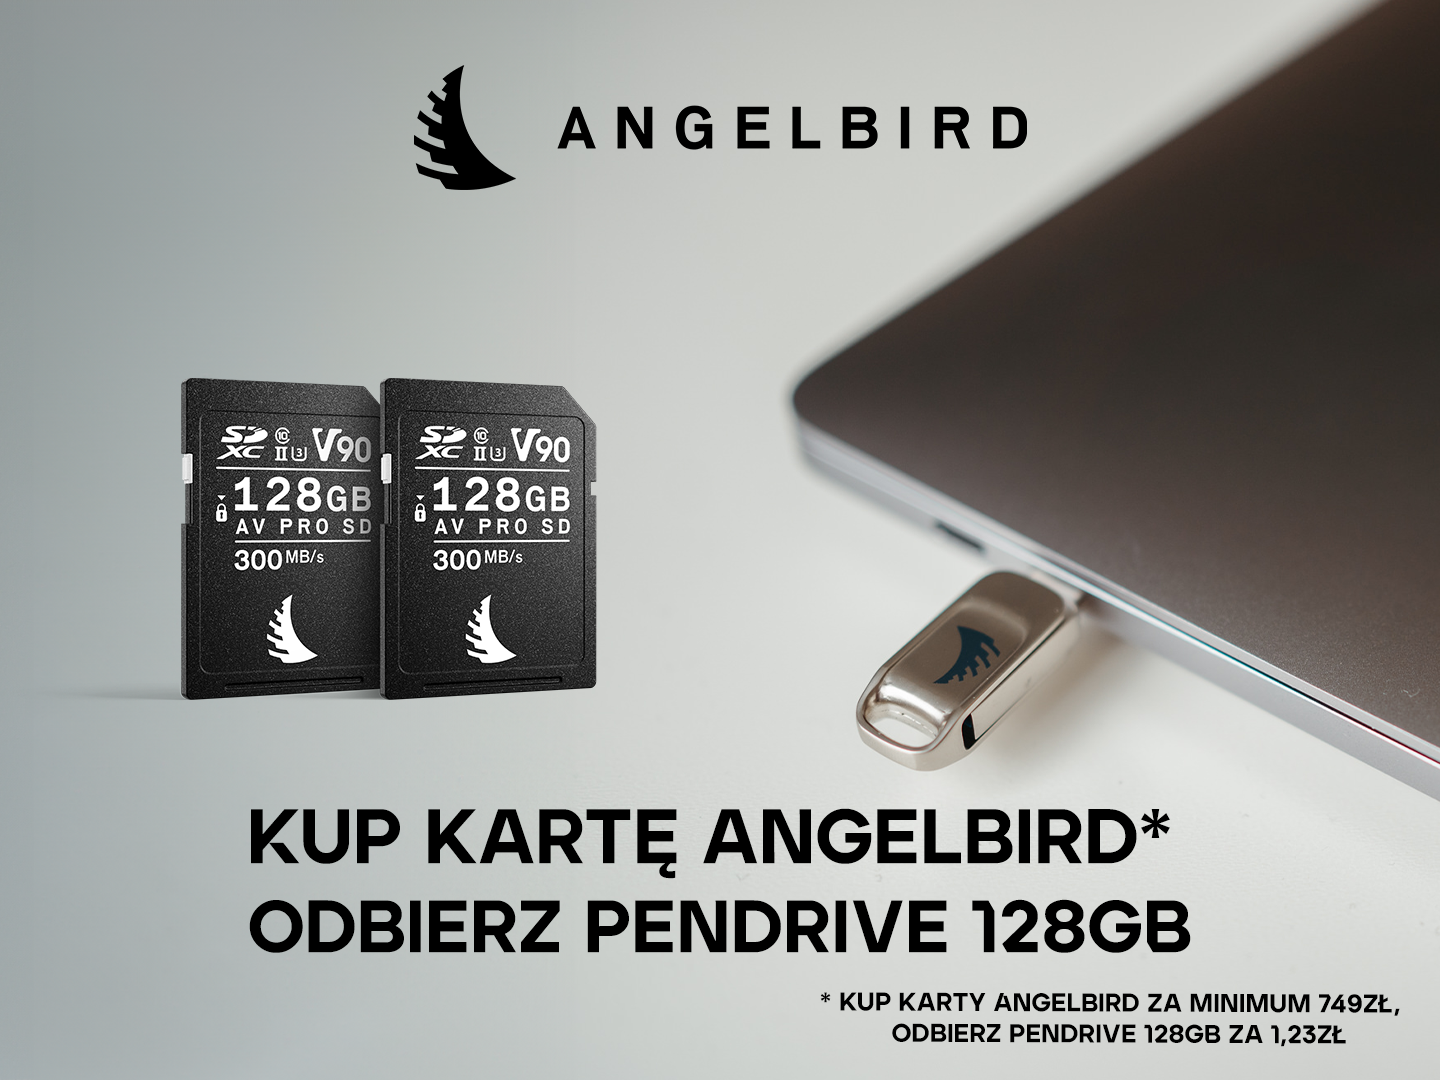 Promocja „Kup kartę Angelbird i odbierz pendrive Angelbird 128GB”